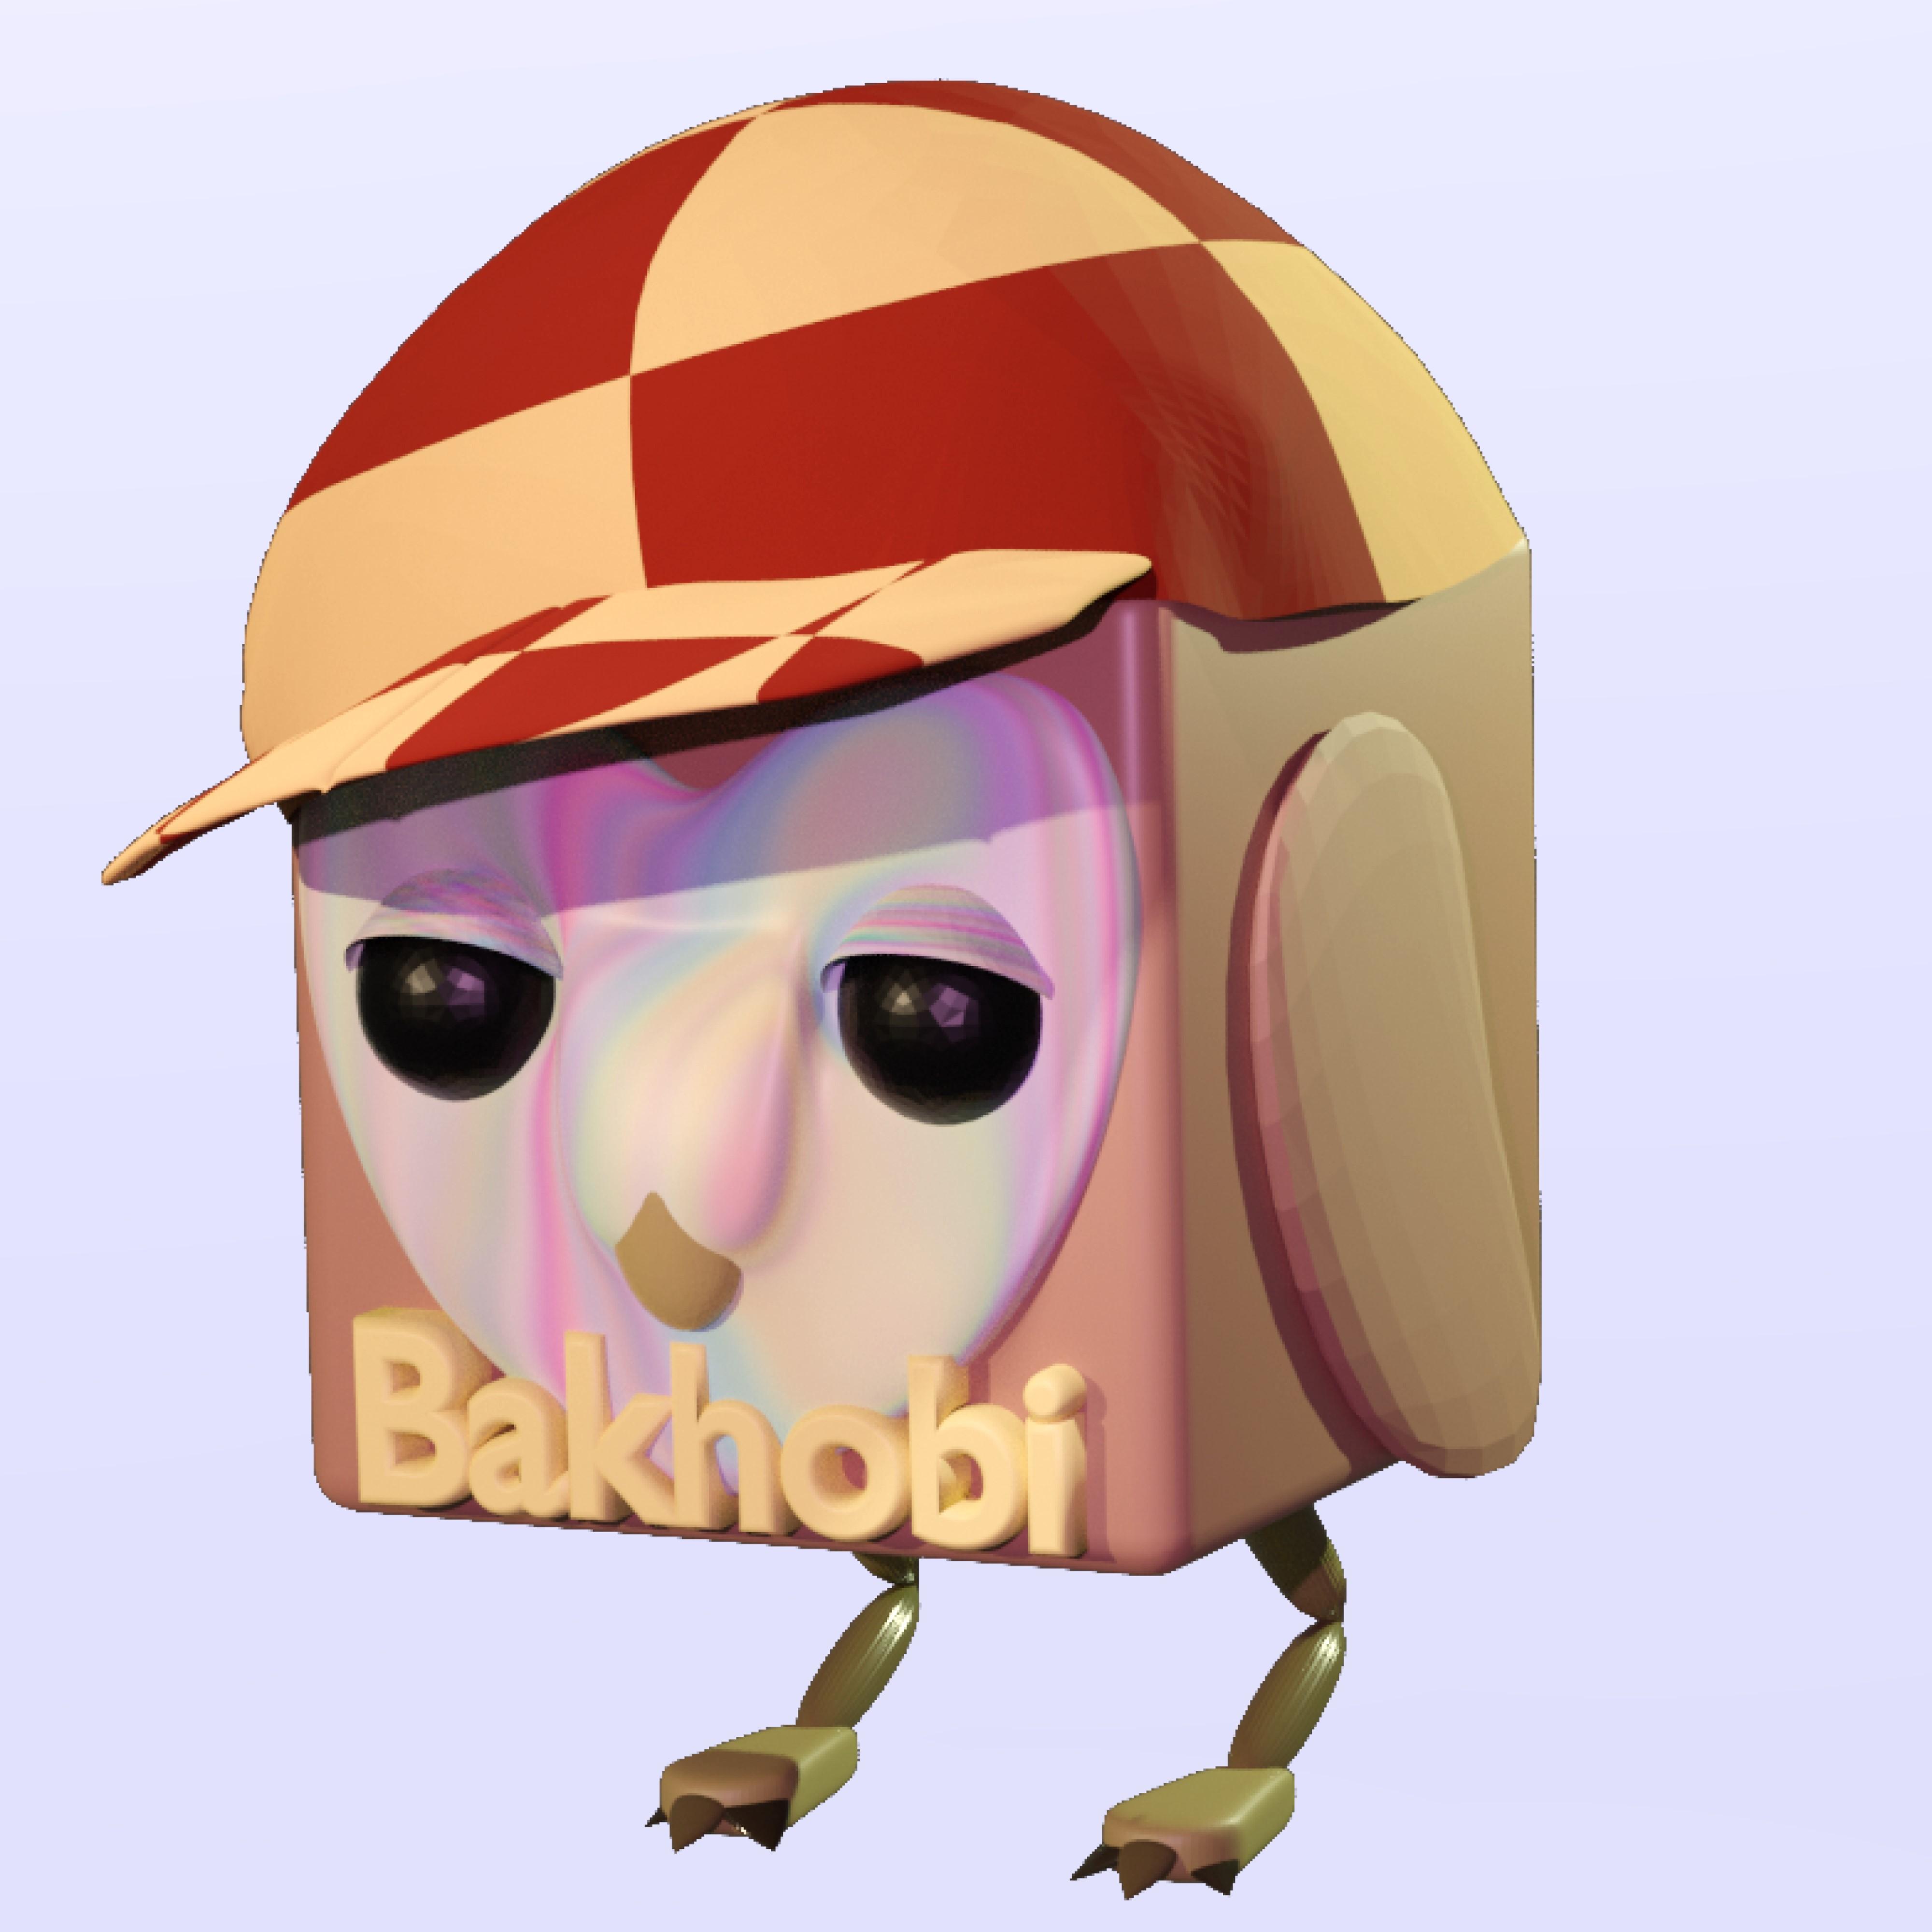 Bakhobi